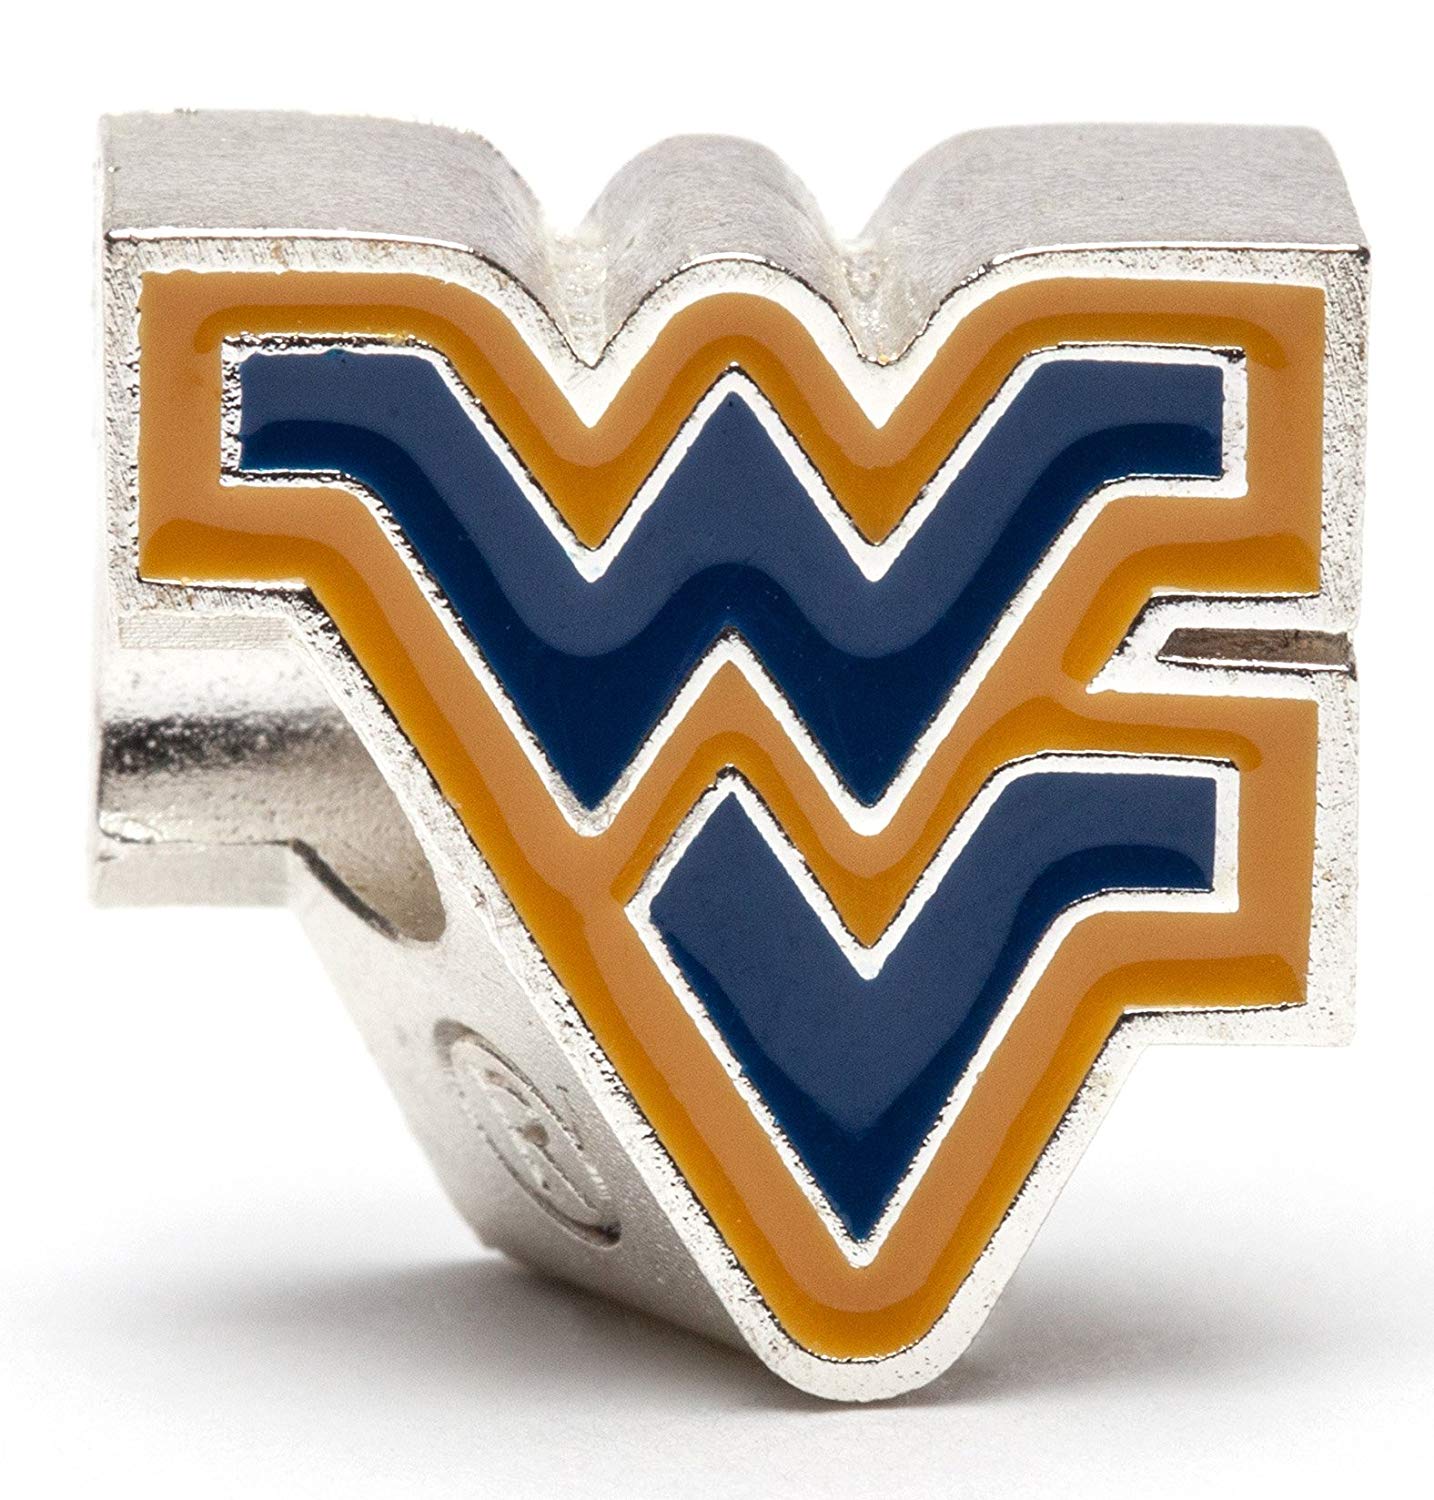 WV Logo - Amazon.com: West Virginia University Bead Charm | West Virginia ...